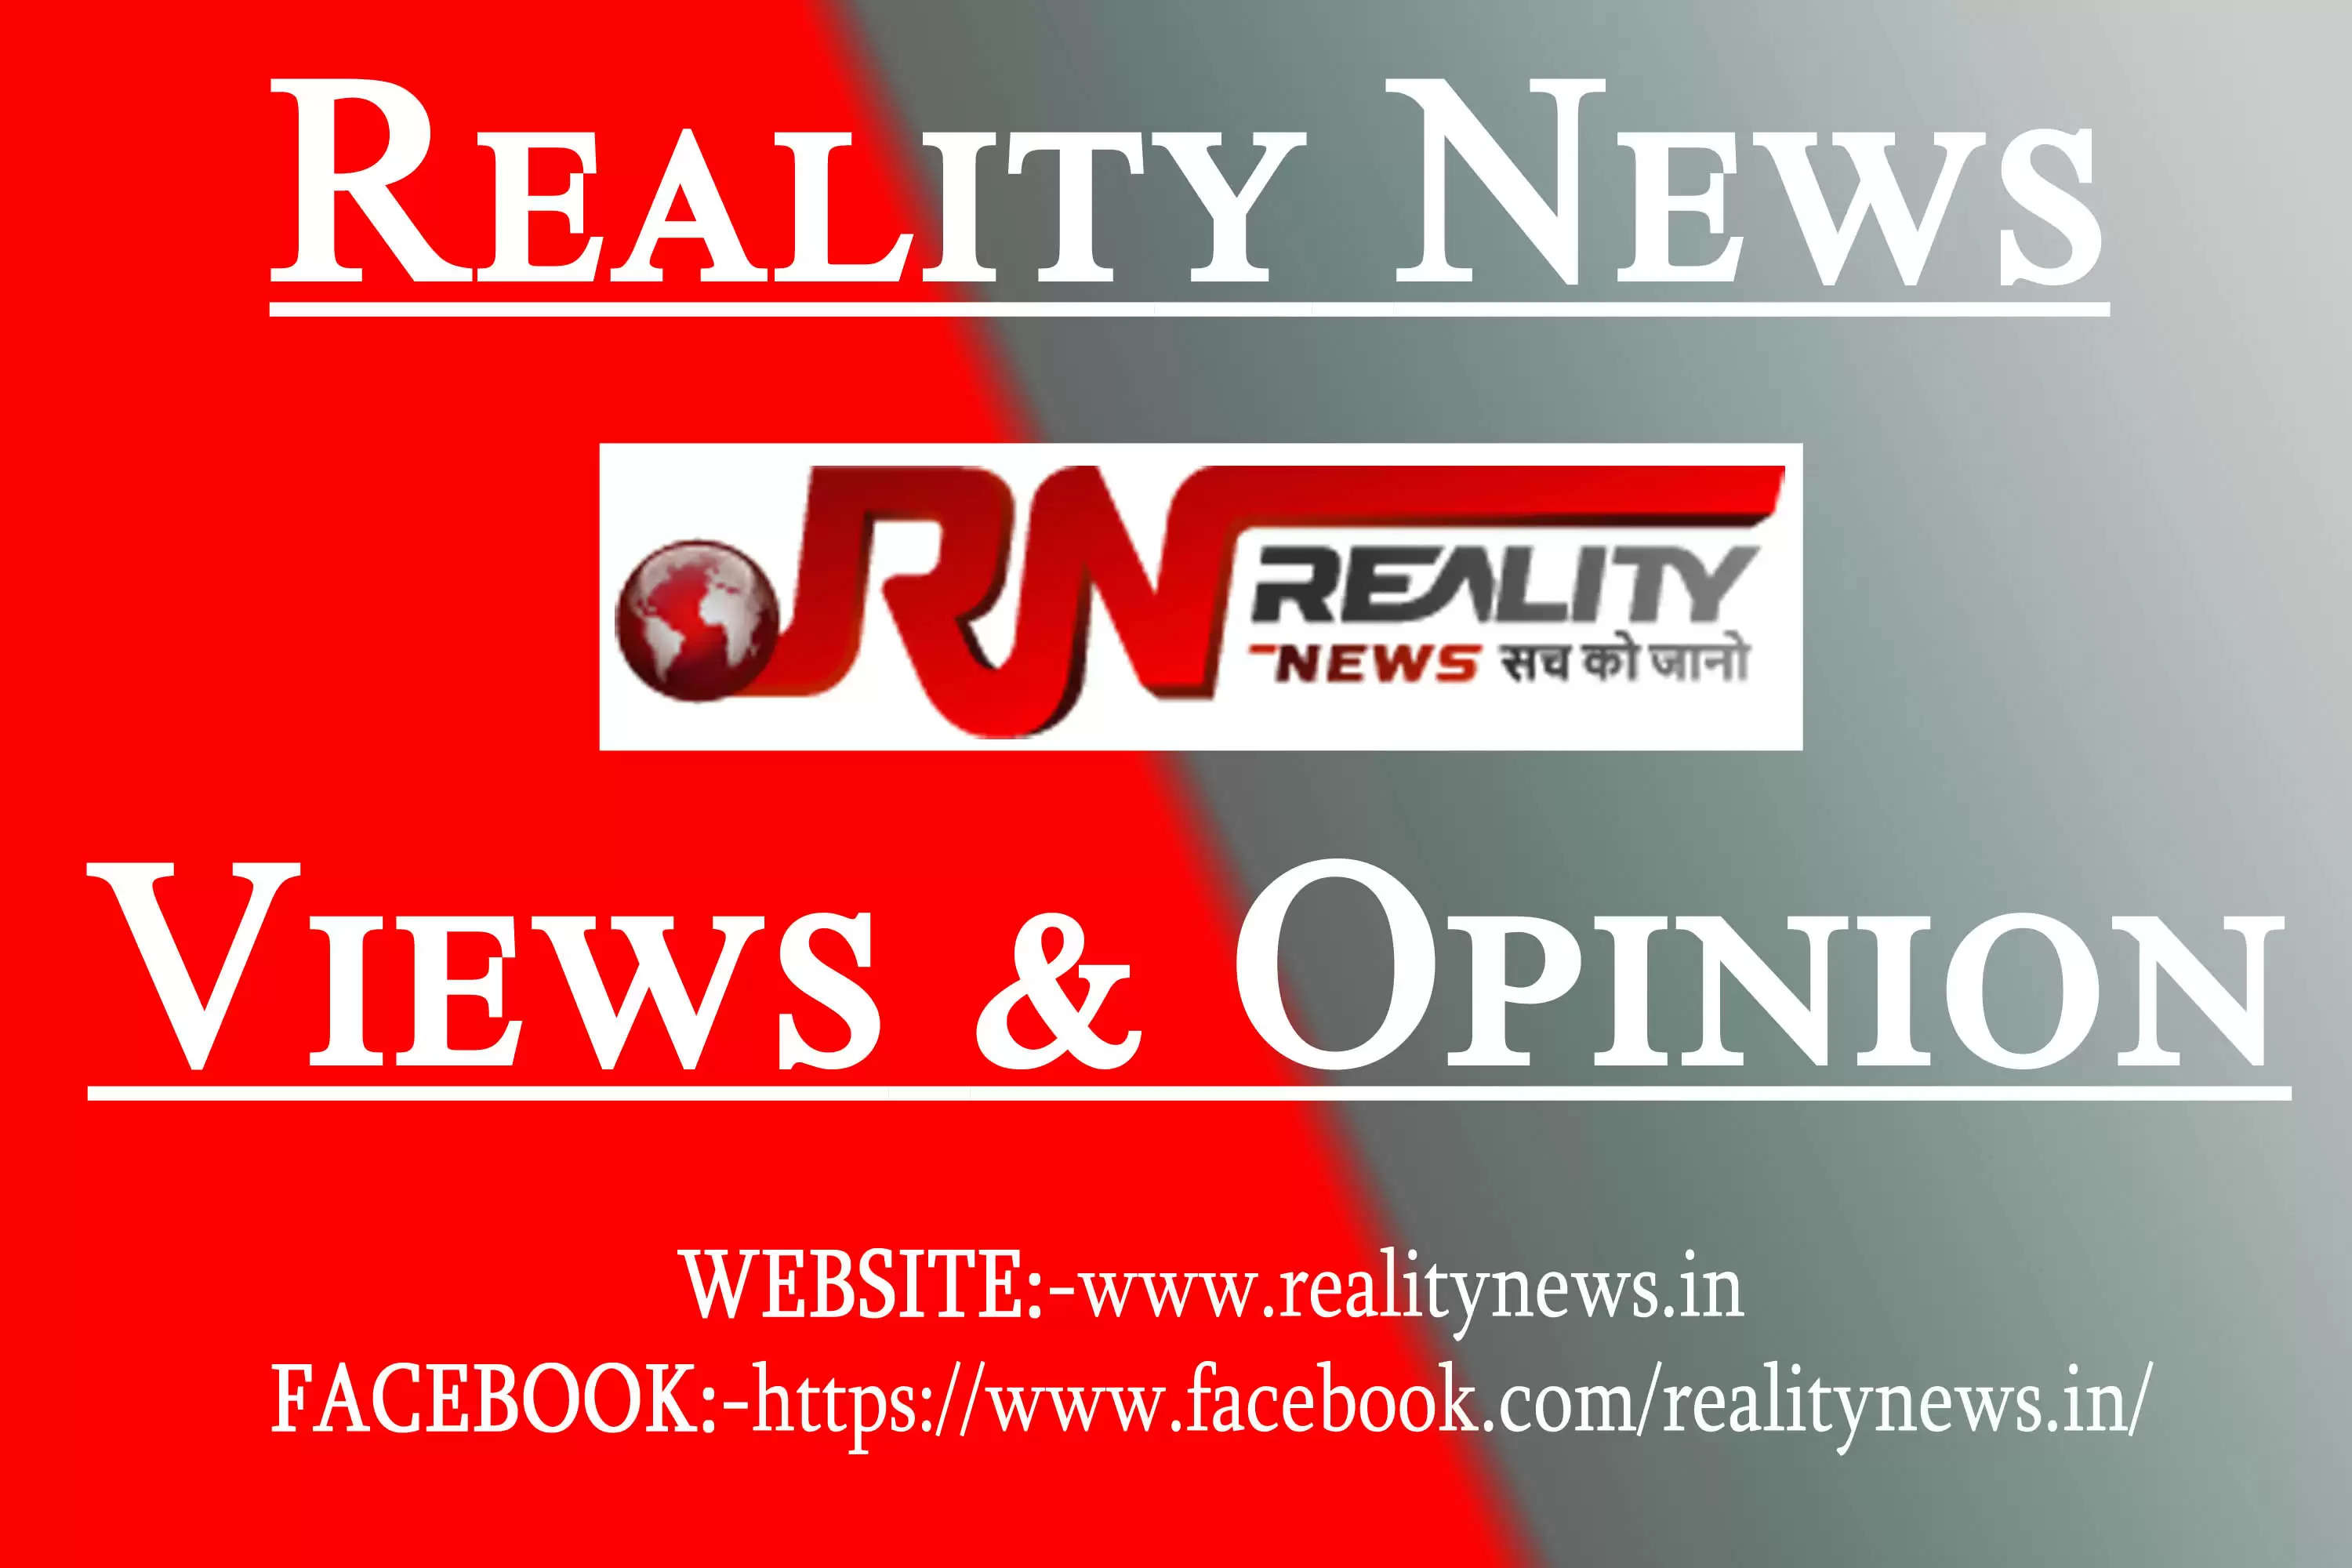 Reality News Views And Opinion 